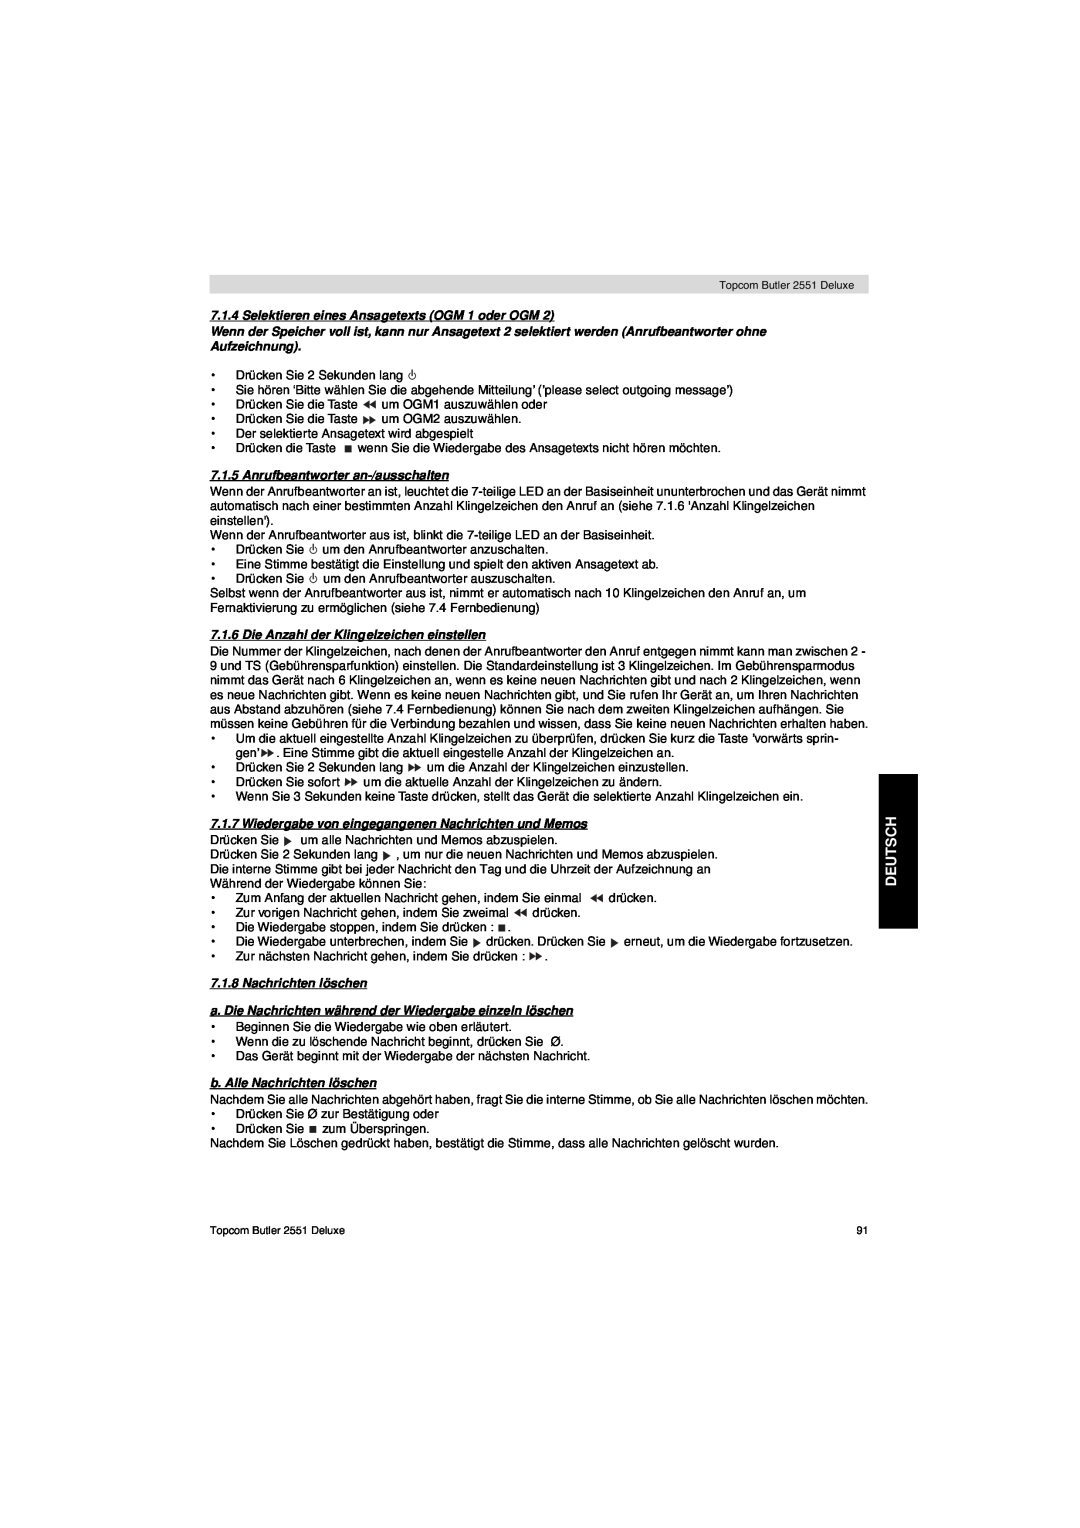 Topcom 2551 Deutsch, Selektieren eines Ansagetexts OGM 1 oder OGM, Anrufbeantworter an-/ausschalten, Nachrichten löschen 